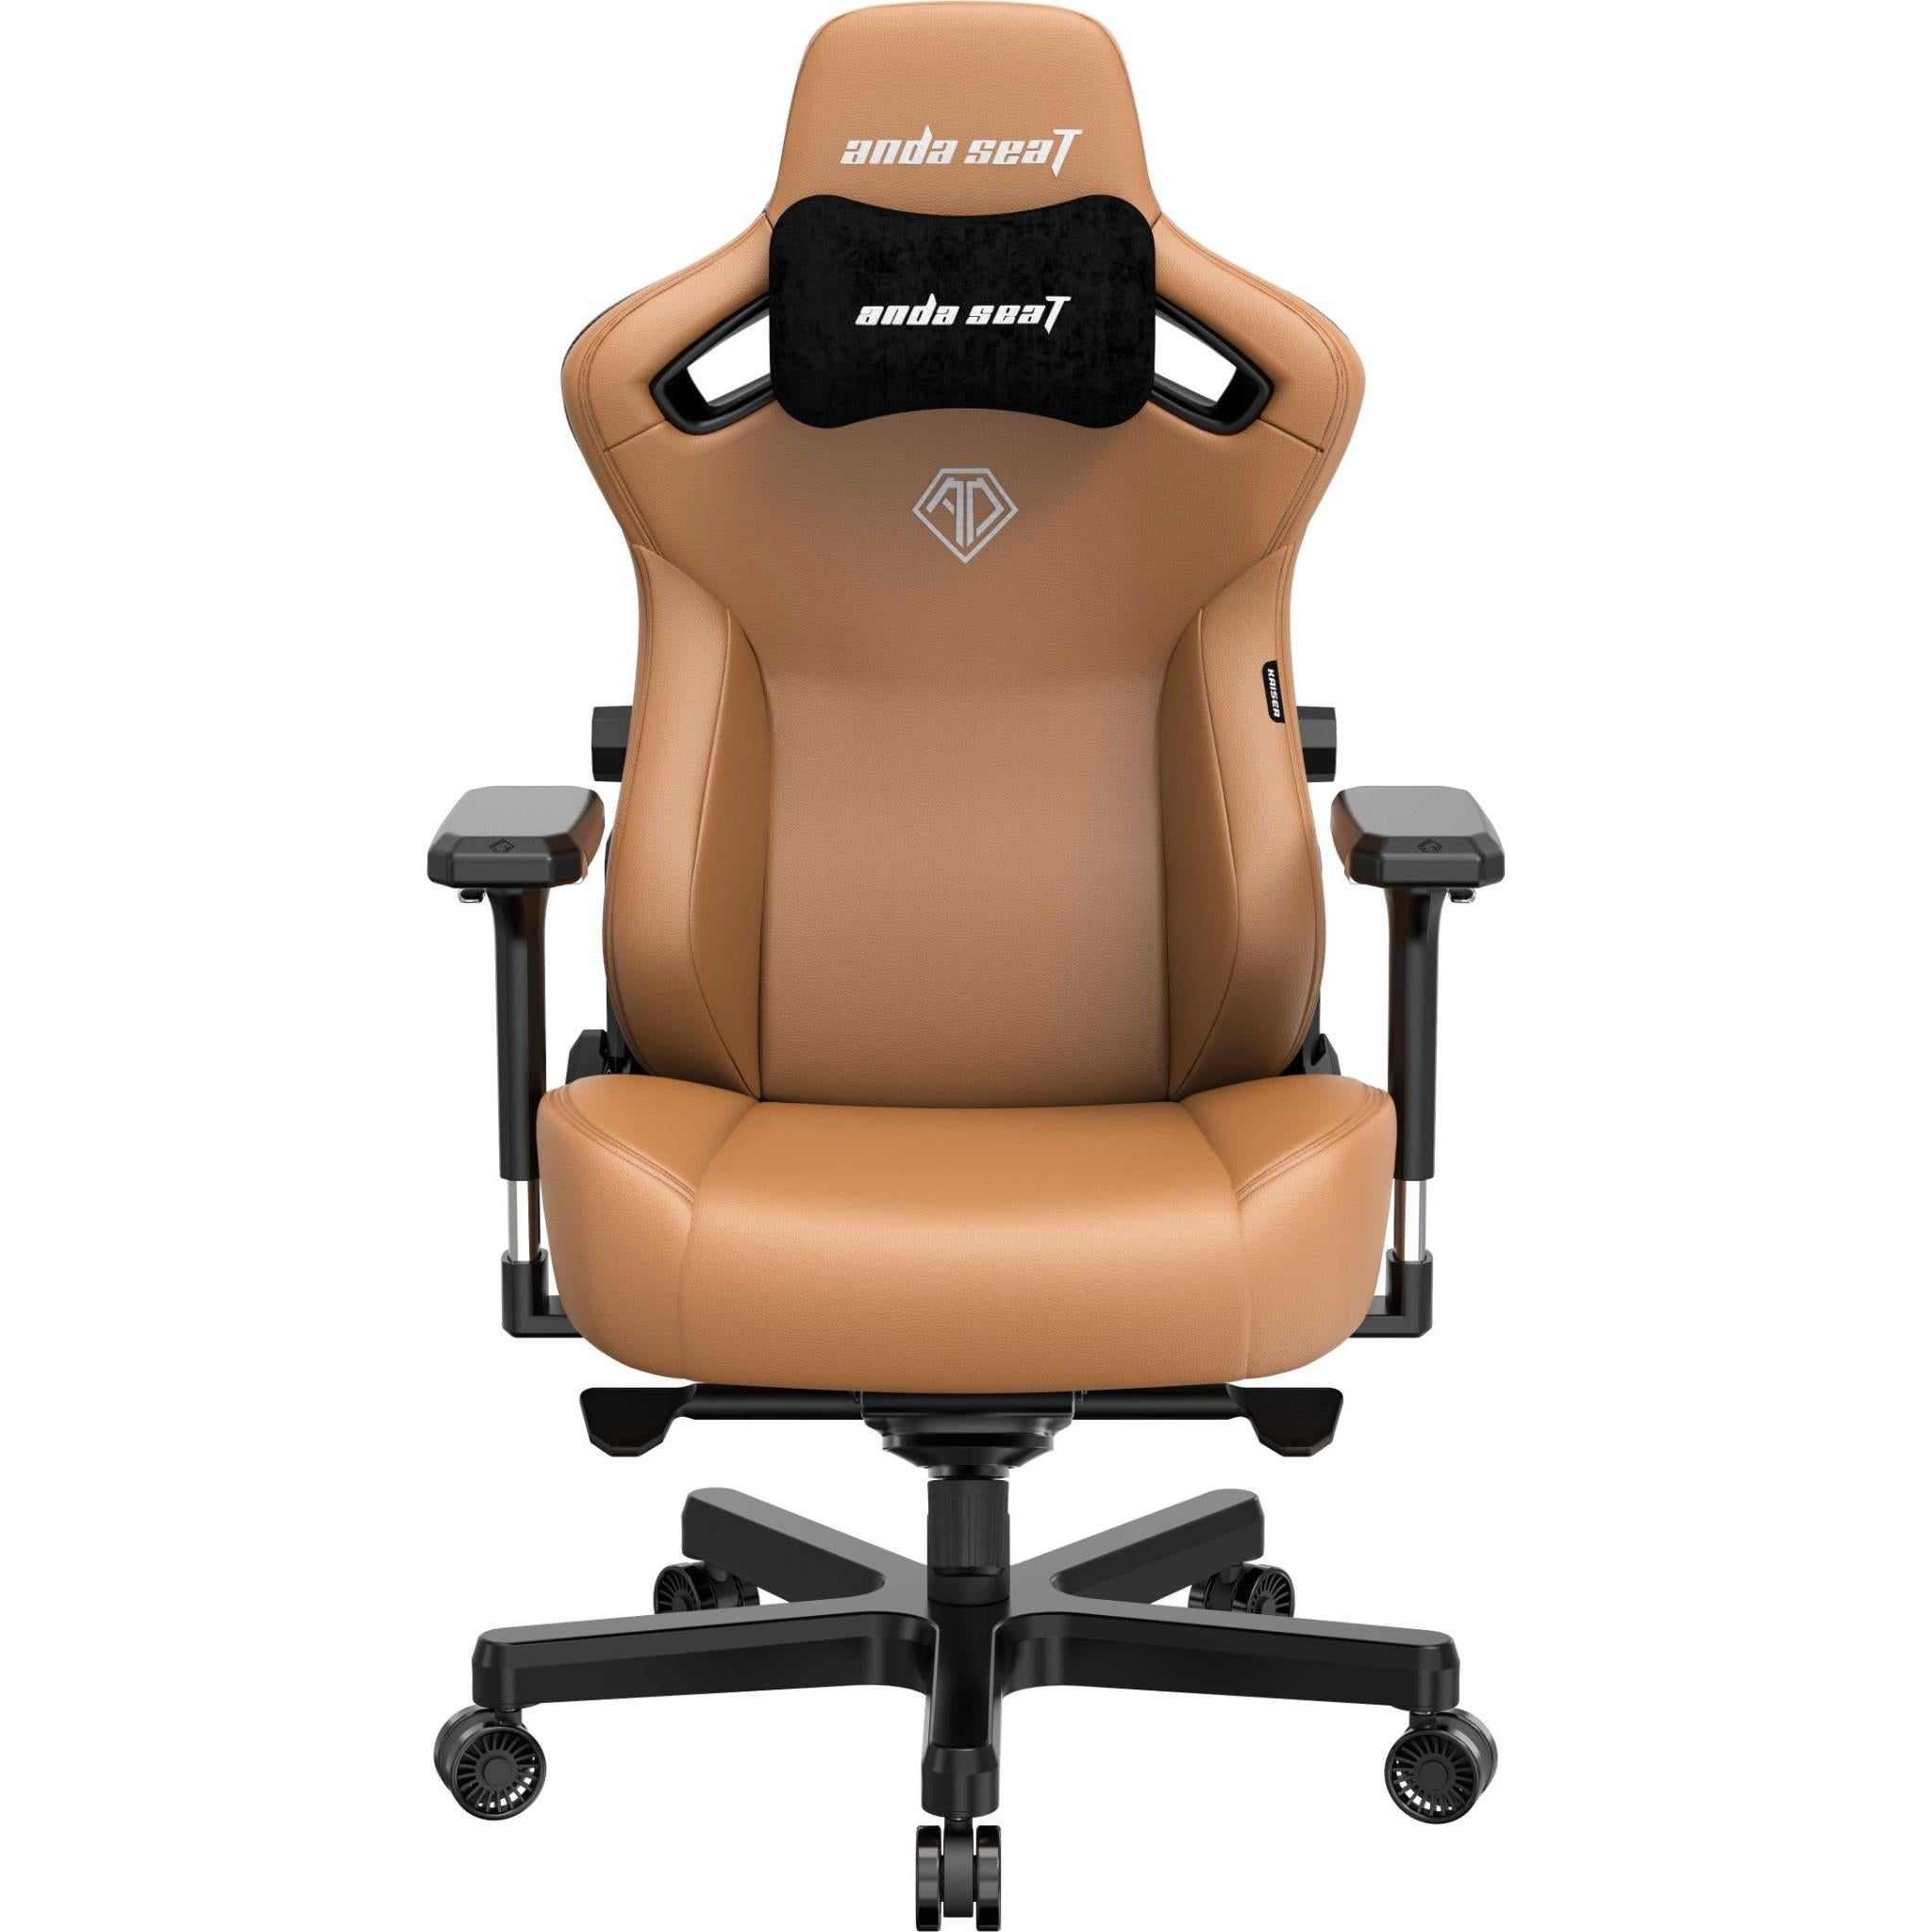 anda seat kaiser 3 series premium gaming chair brown (large)